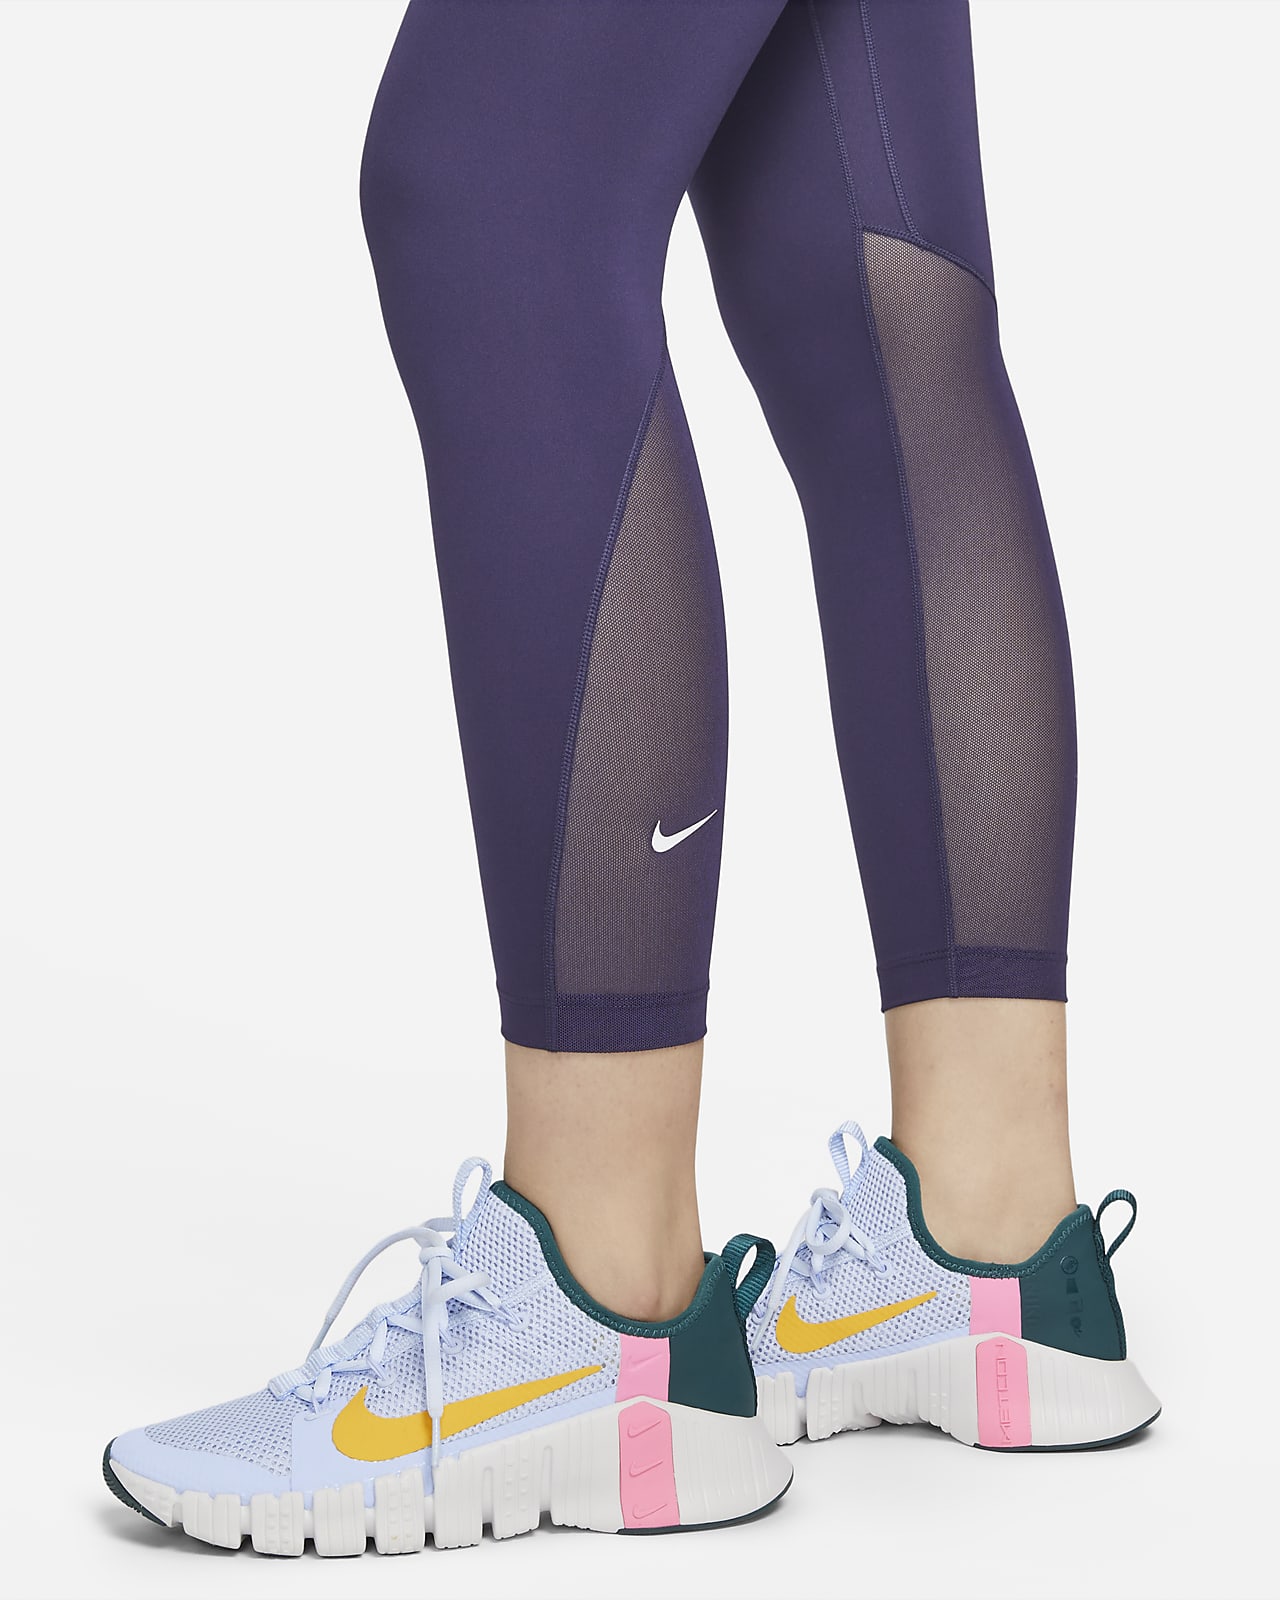 Women’s Nike One Dri-FIT high-rise leggings